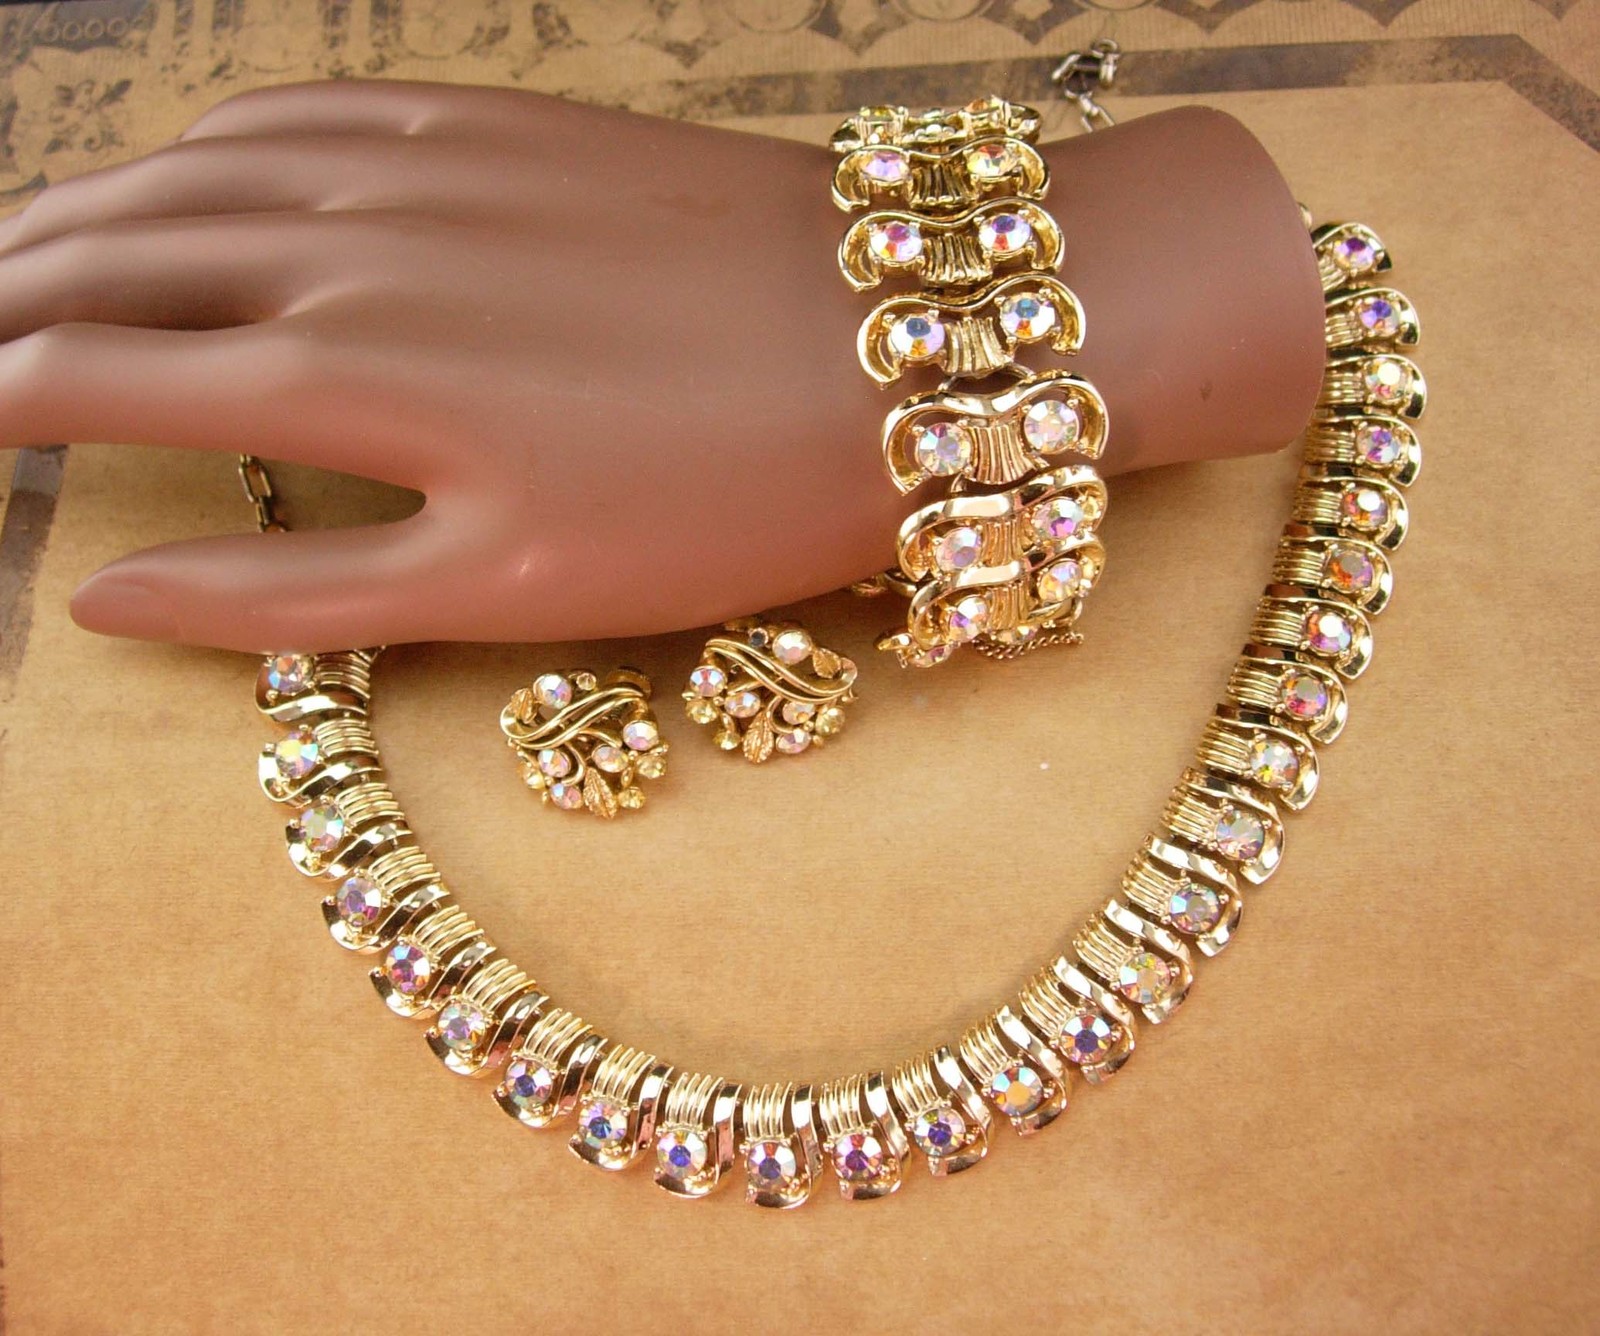 Primary image for Vintage 50's Signed Parure - Lisner bracelet set - aurora borealis necklace - rh